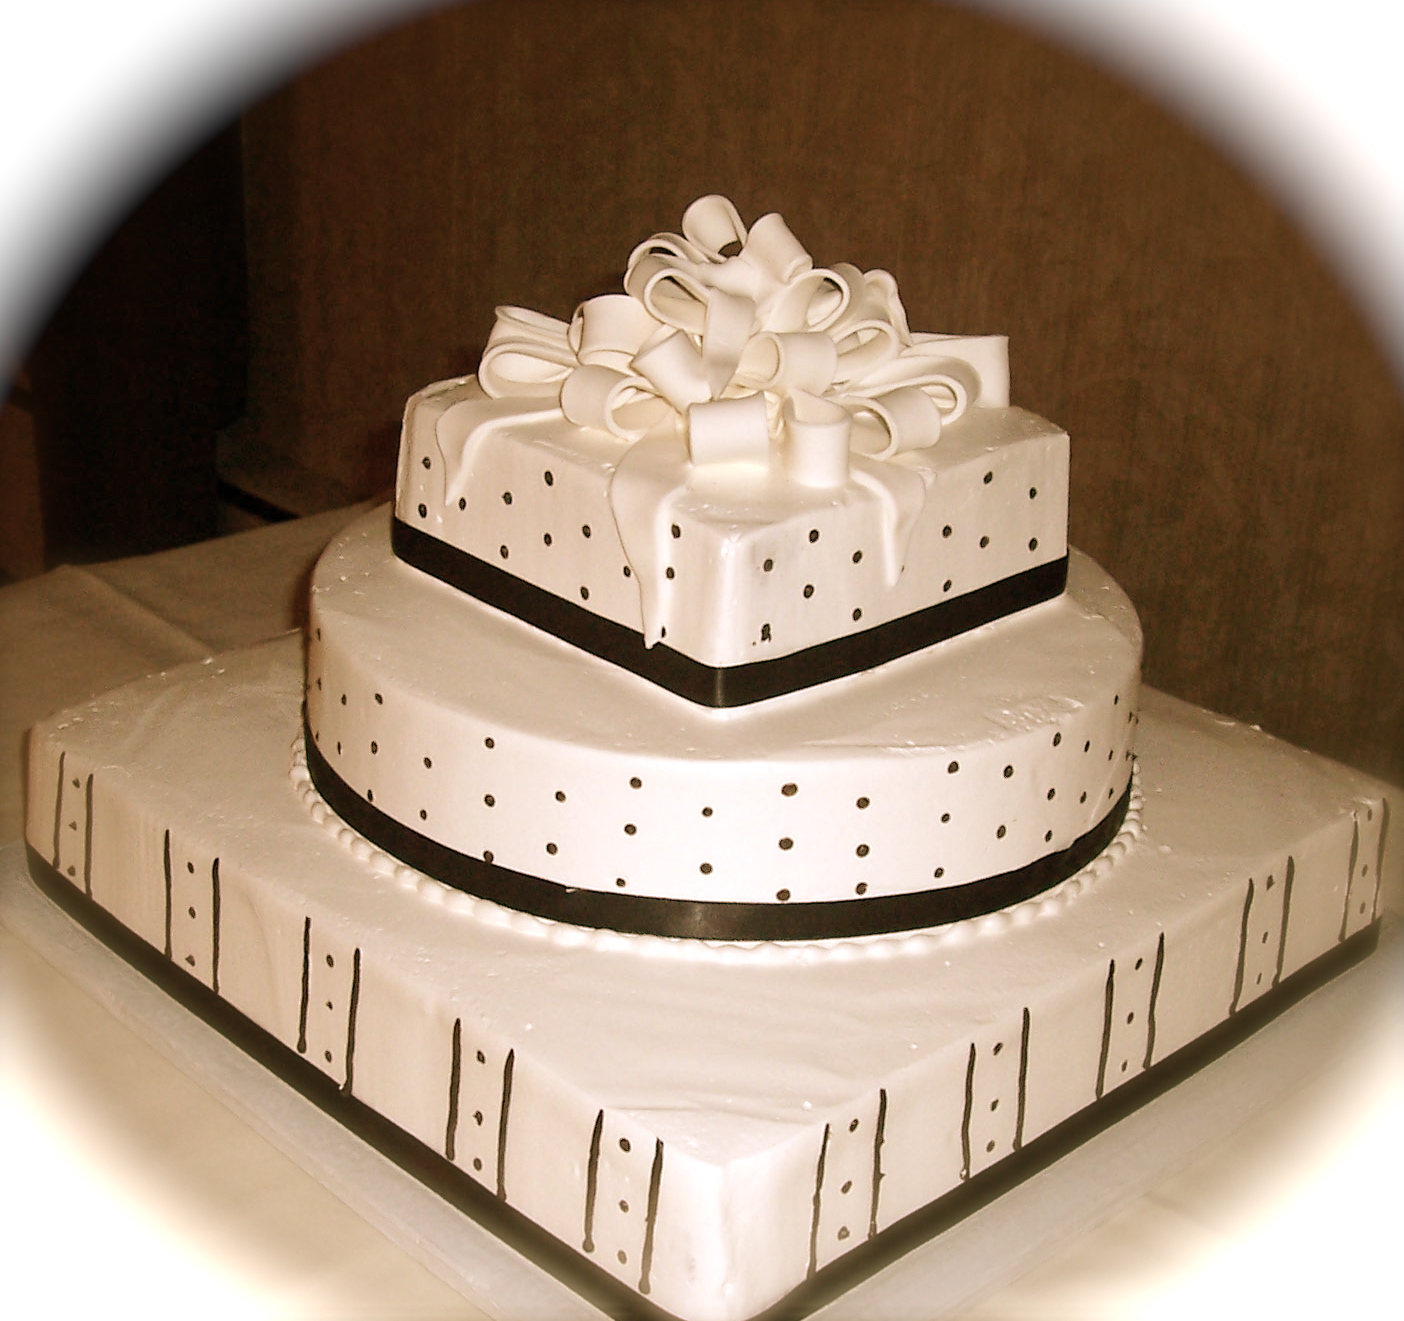 This beautiful wedding cake